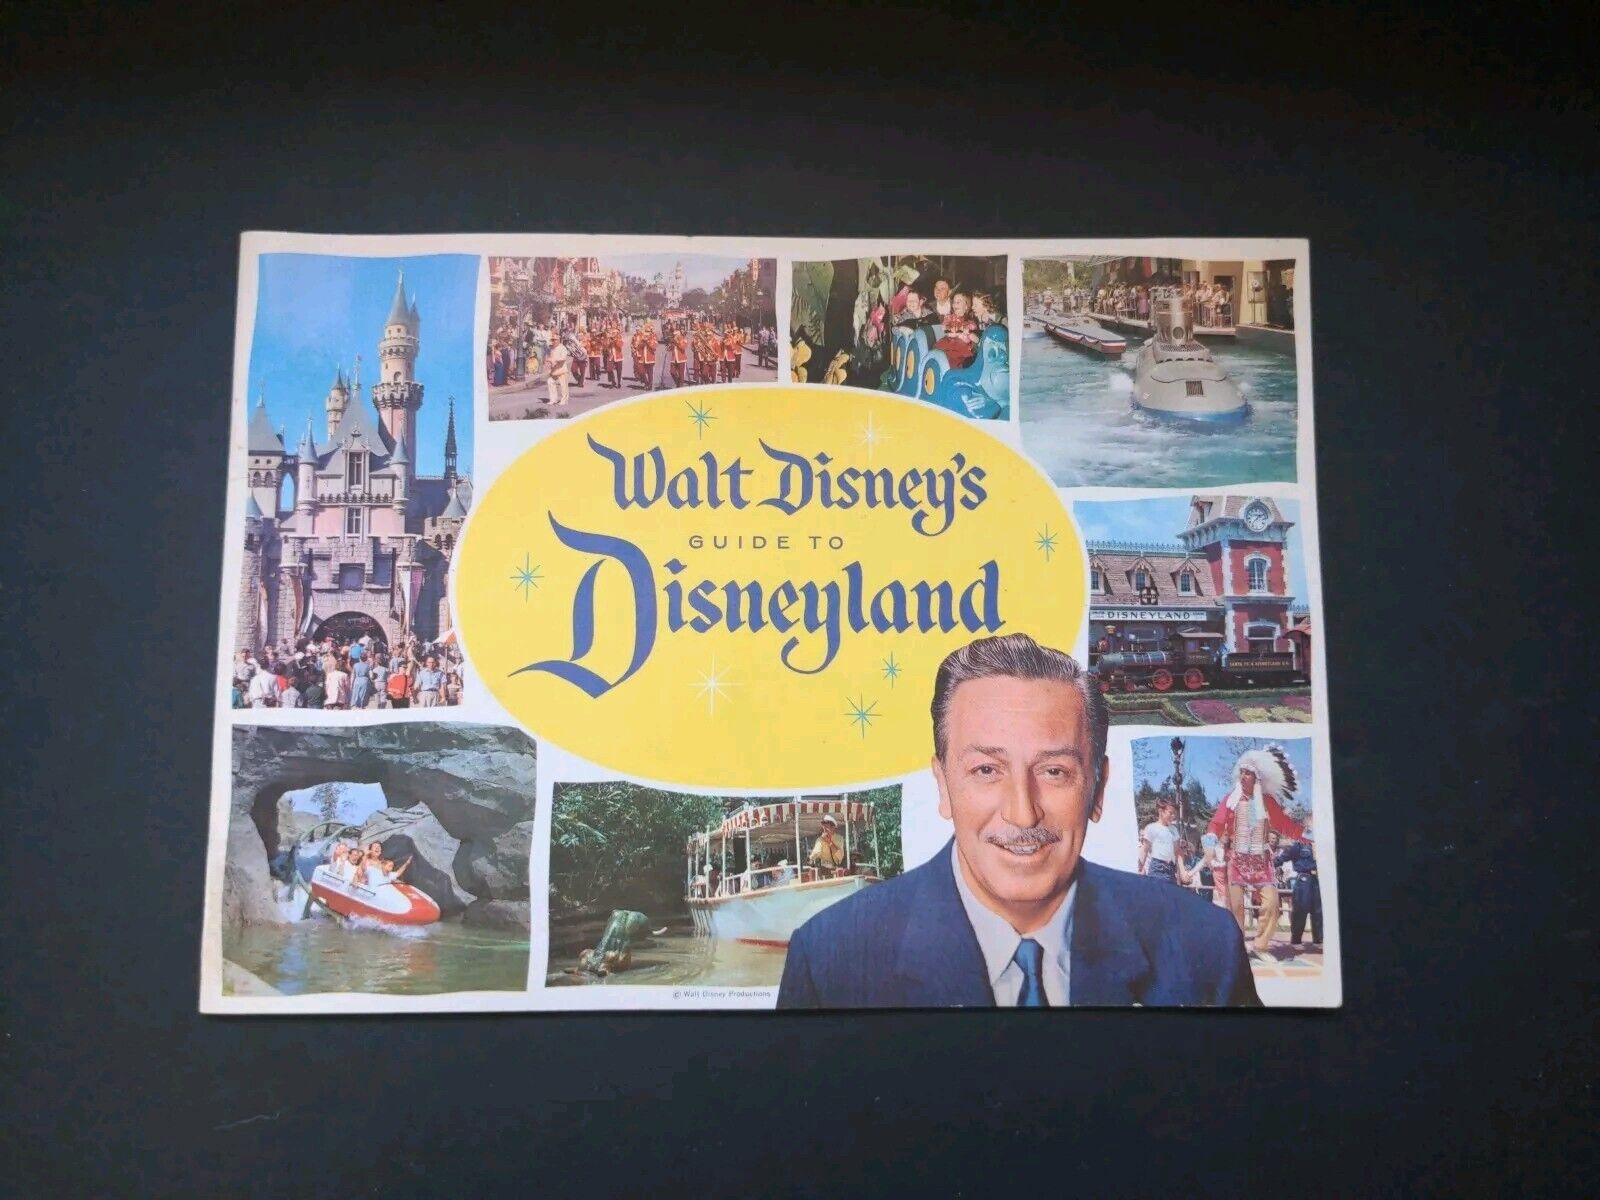 Vintage Original 1960 Walt Disney's Guide to Disneyland Souvenir Booklet